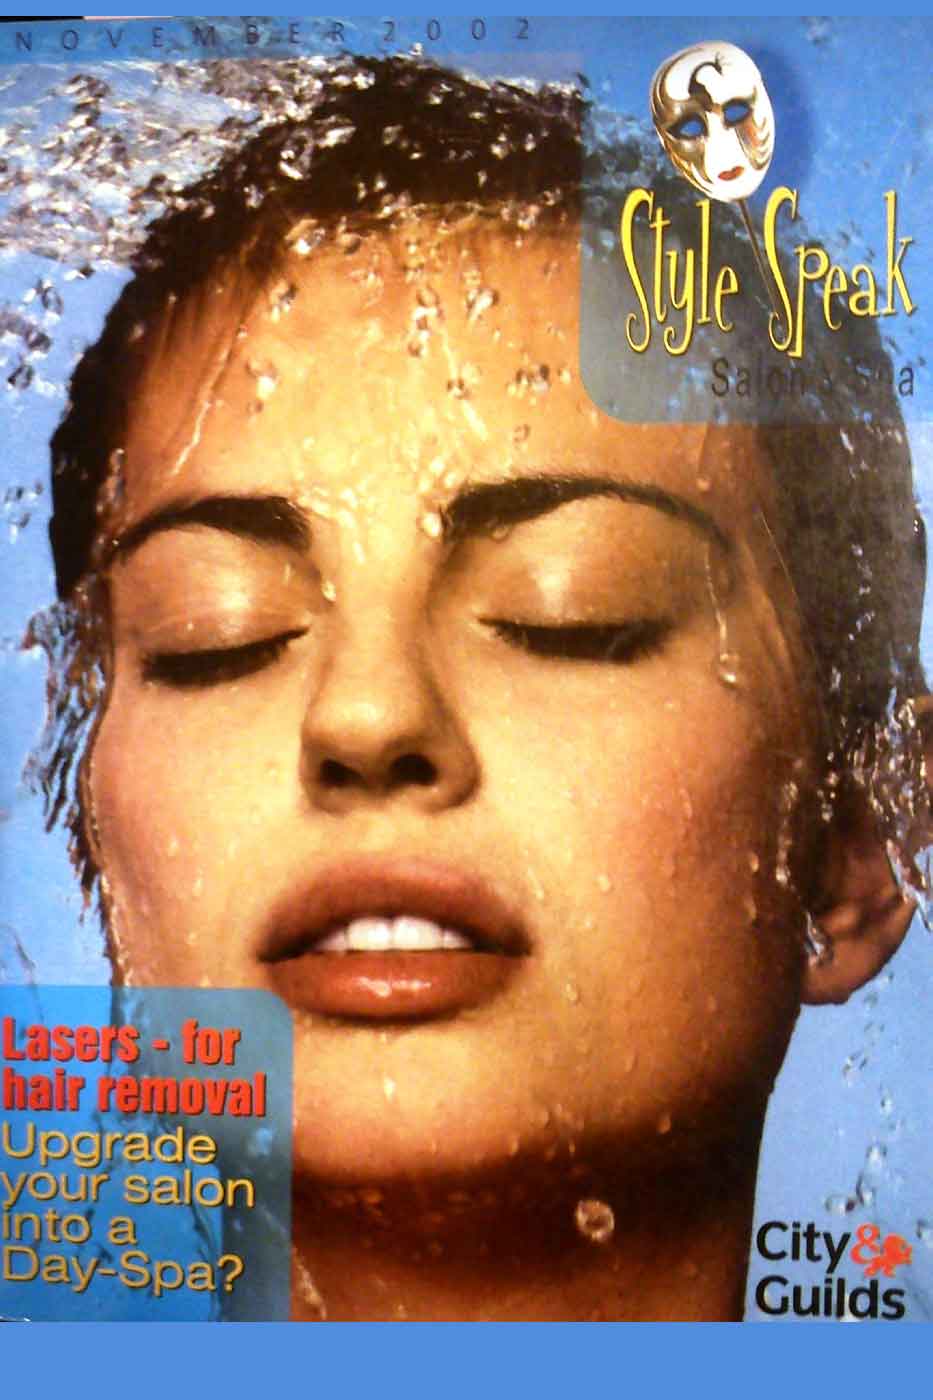 first ever magazine cover of stylespeak magazine